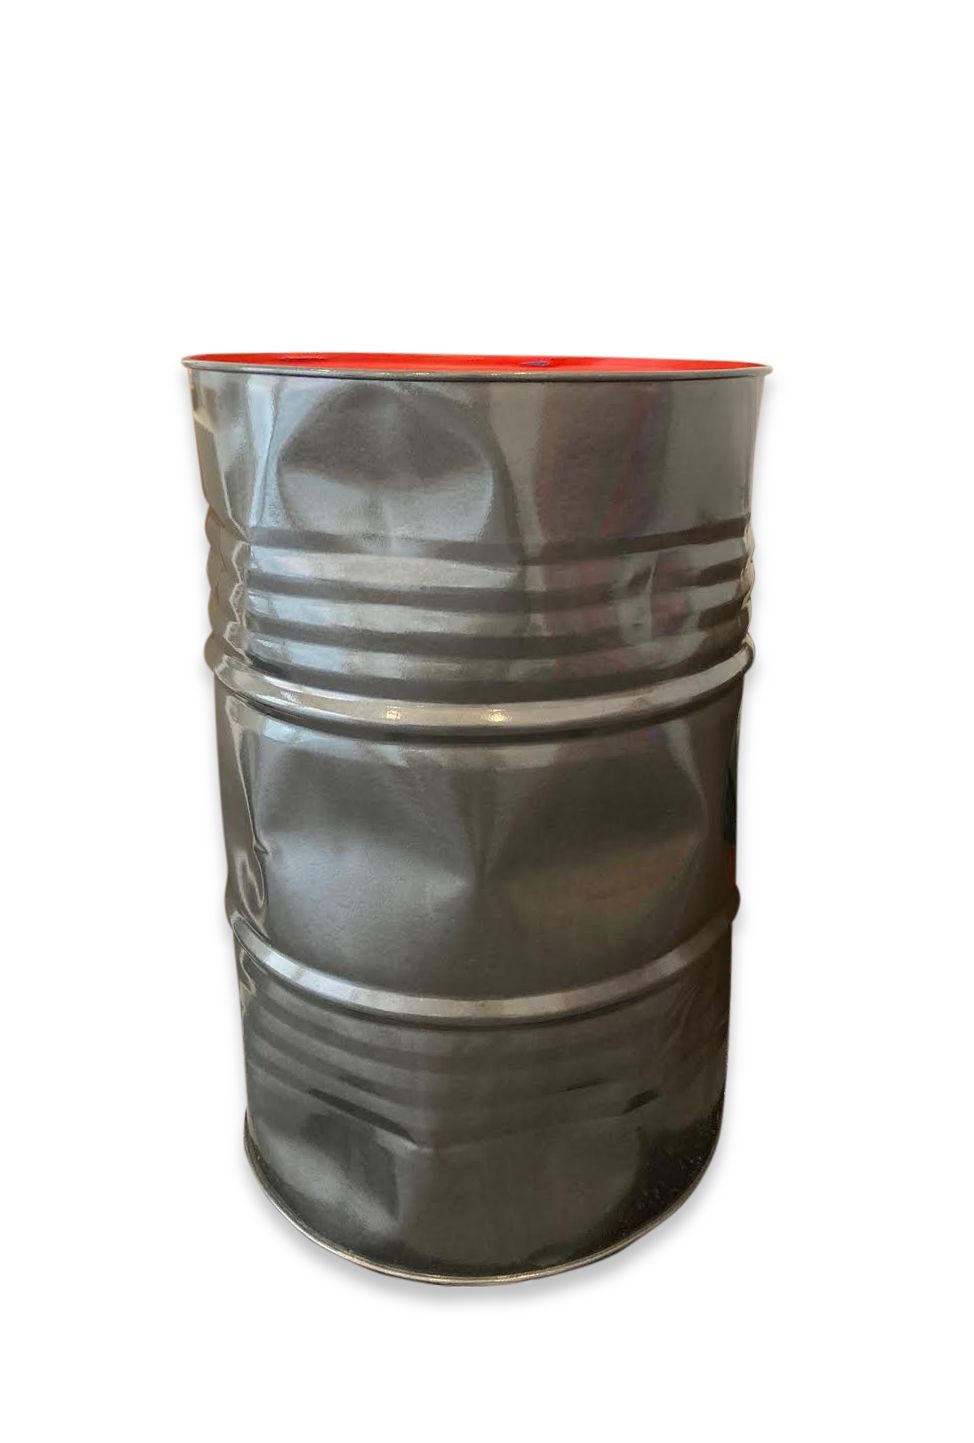 John Tobb (Né en 1953) 一个凹陷的金属桶

灰色的阿斯顿-马丁金属车身漆和红色丙烯酸漆顶棚

高89 x 直径58厘米

已签名，编号为1&hellip;